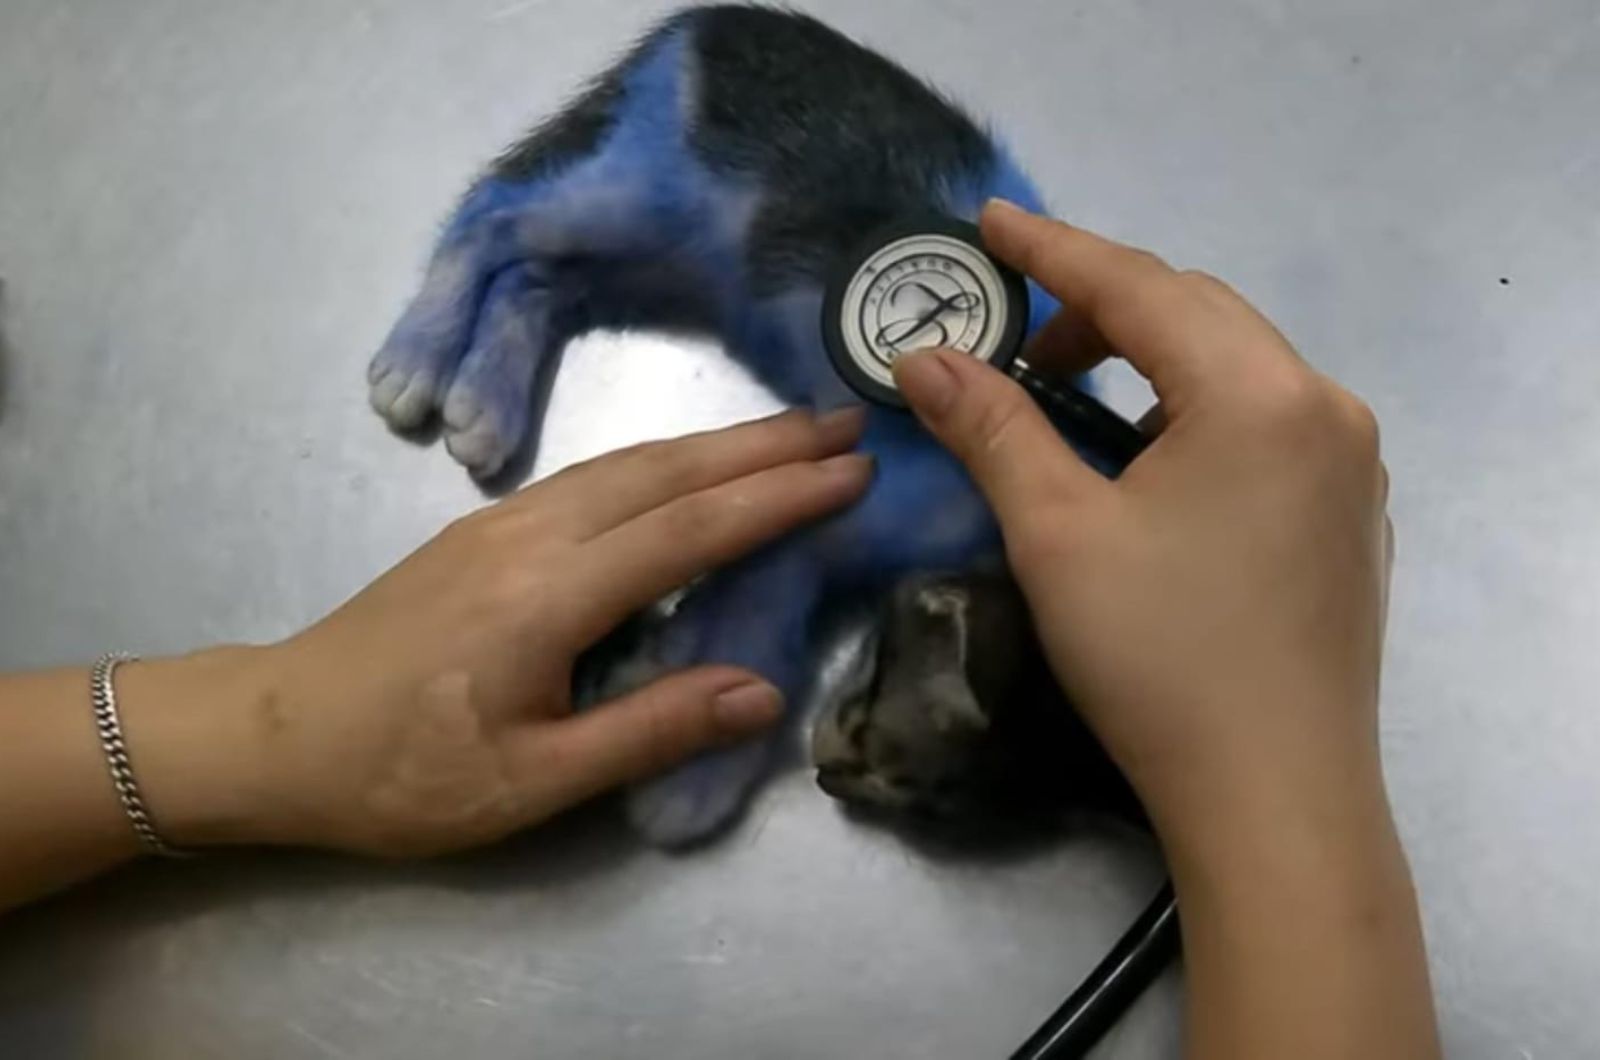 vet examining the kitten